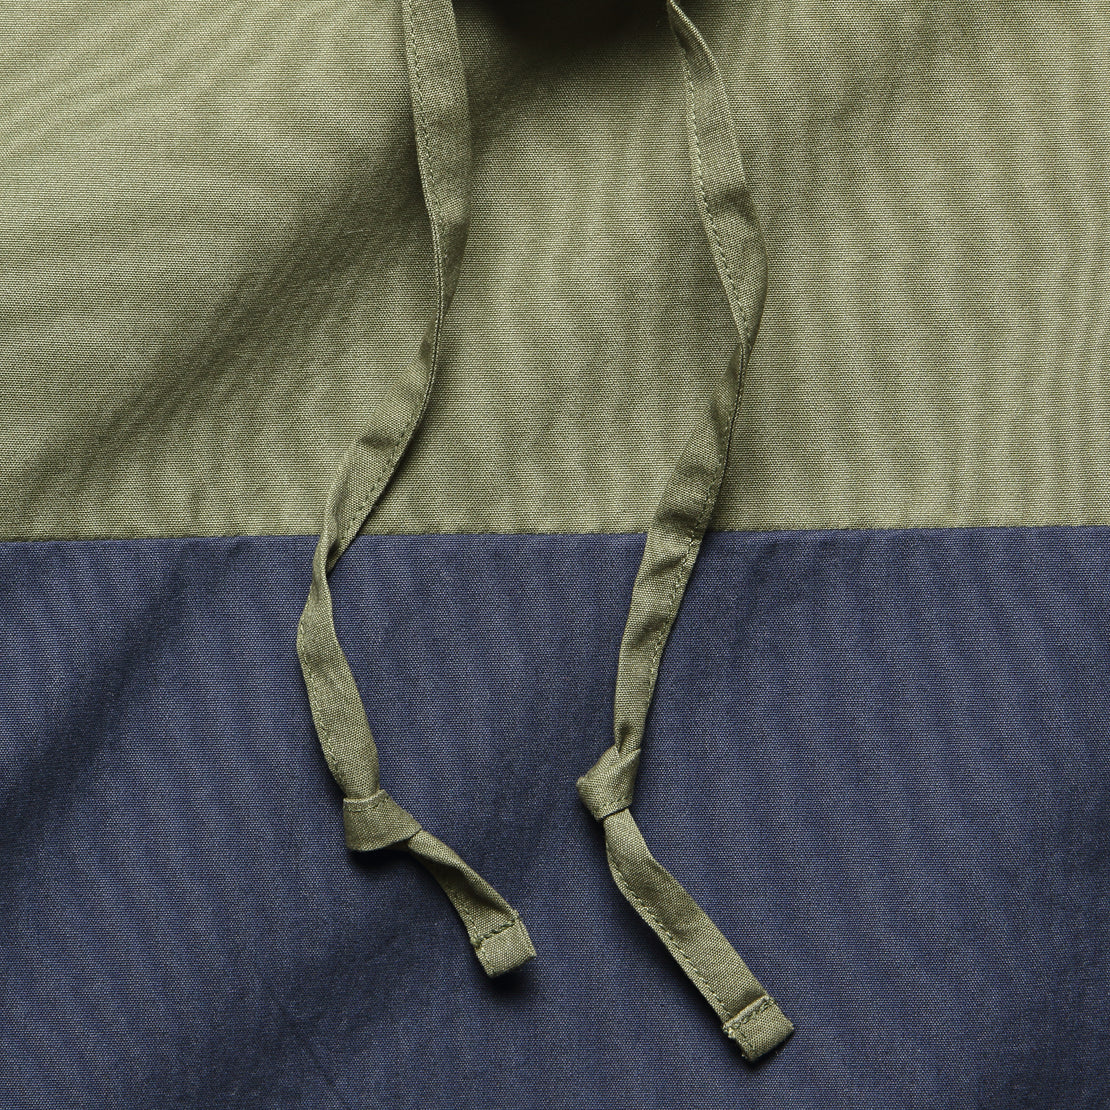 Paneled Mock Neck Pullover - Olive/Navy/Black - Monitaly - STAG Provisions - Tops - Fleece / Sweatshirt